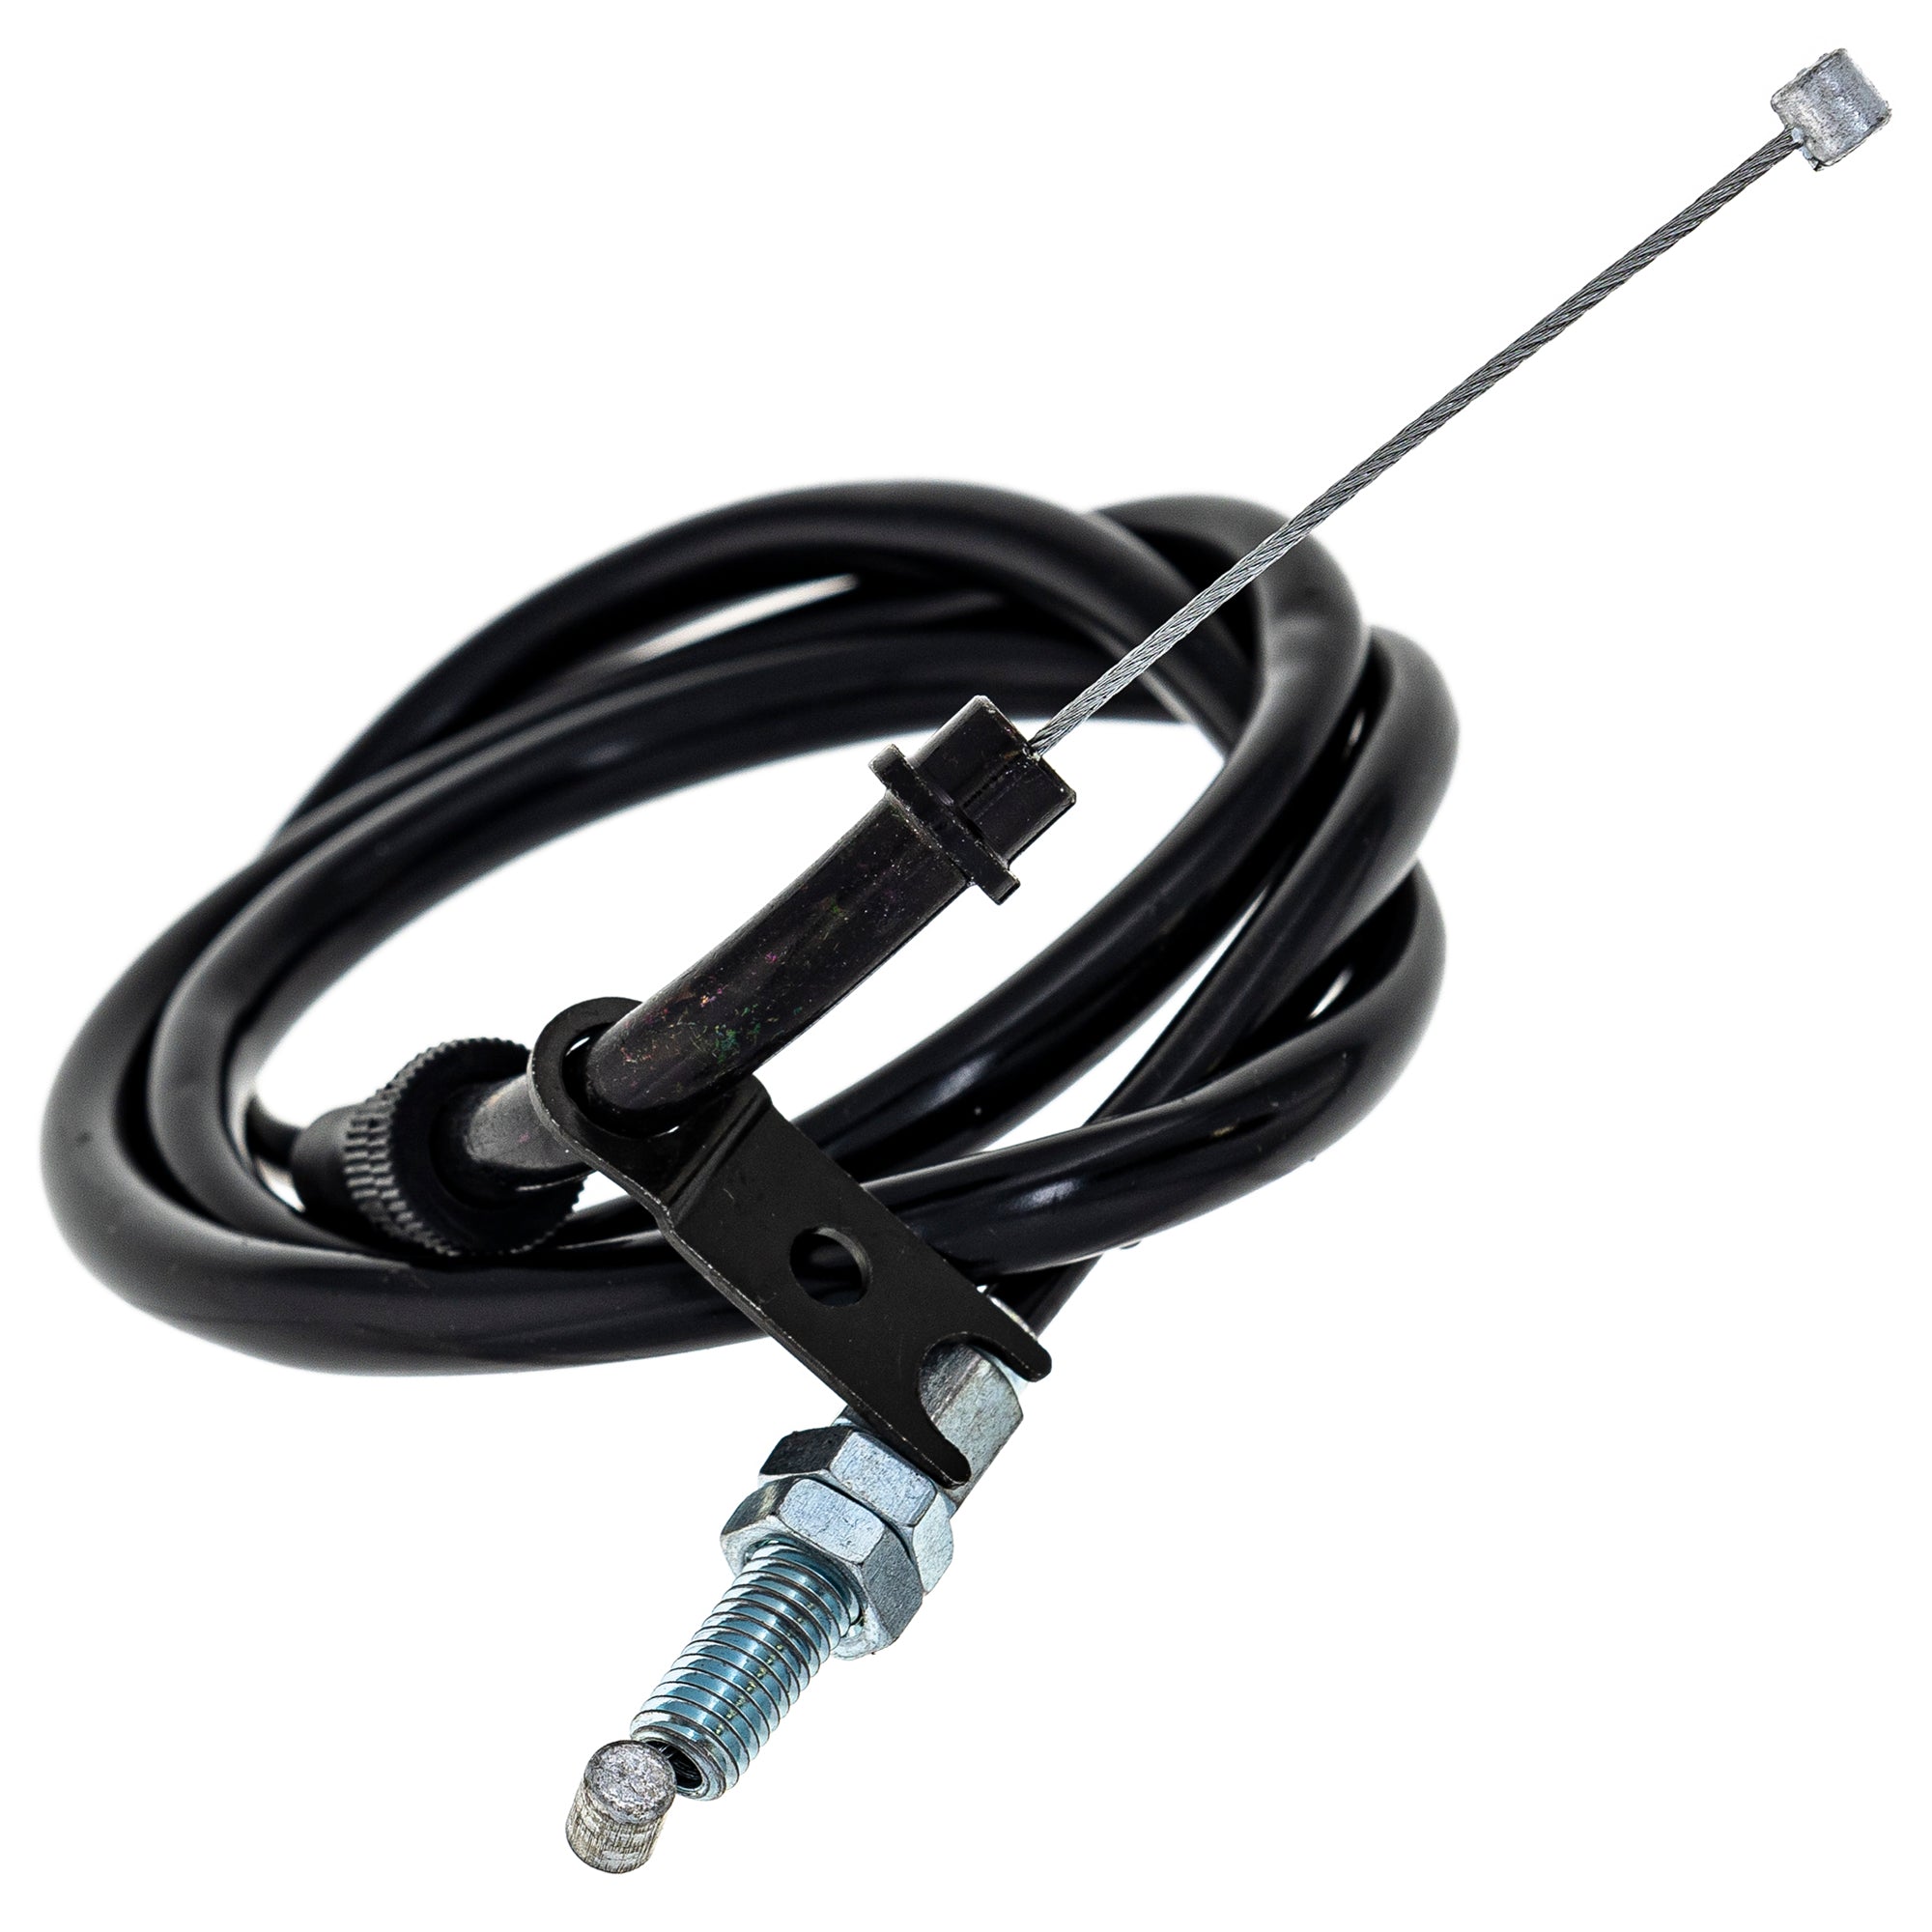 Push Throttle Cable for Suzuki V-Strom 650 DL650 58300-27G20